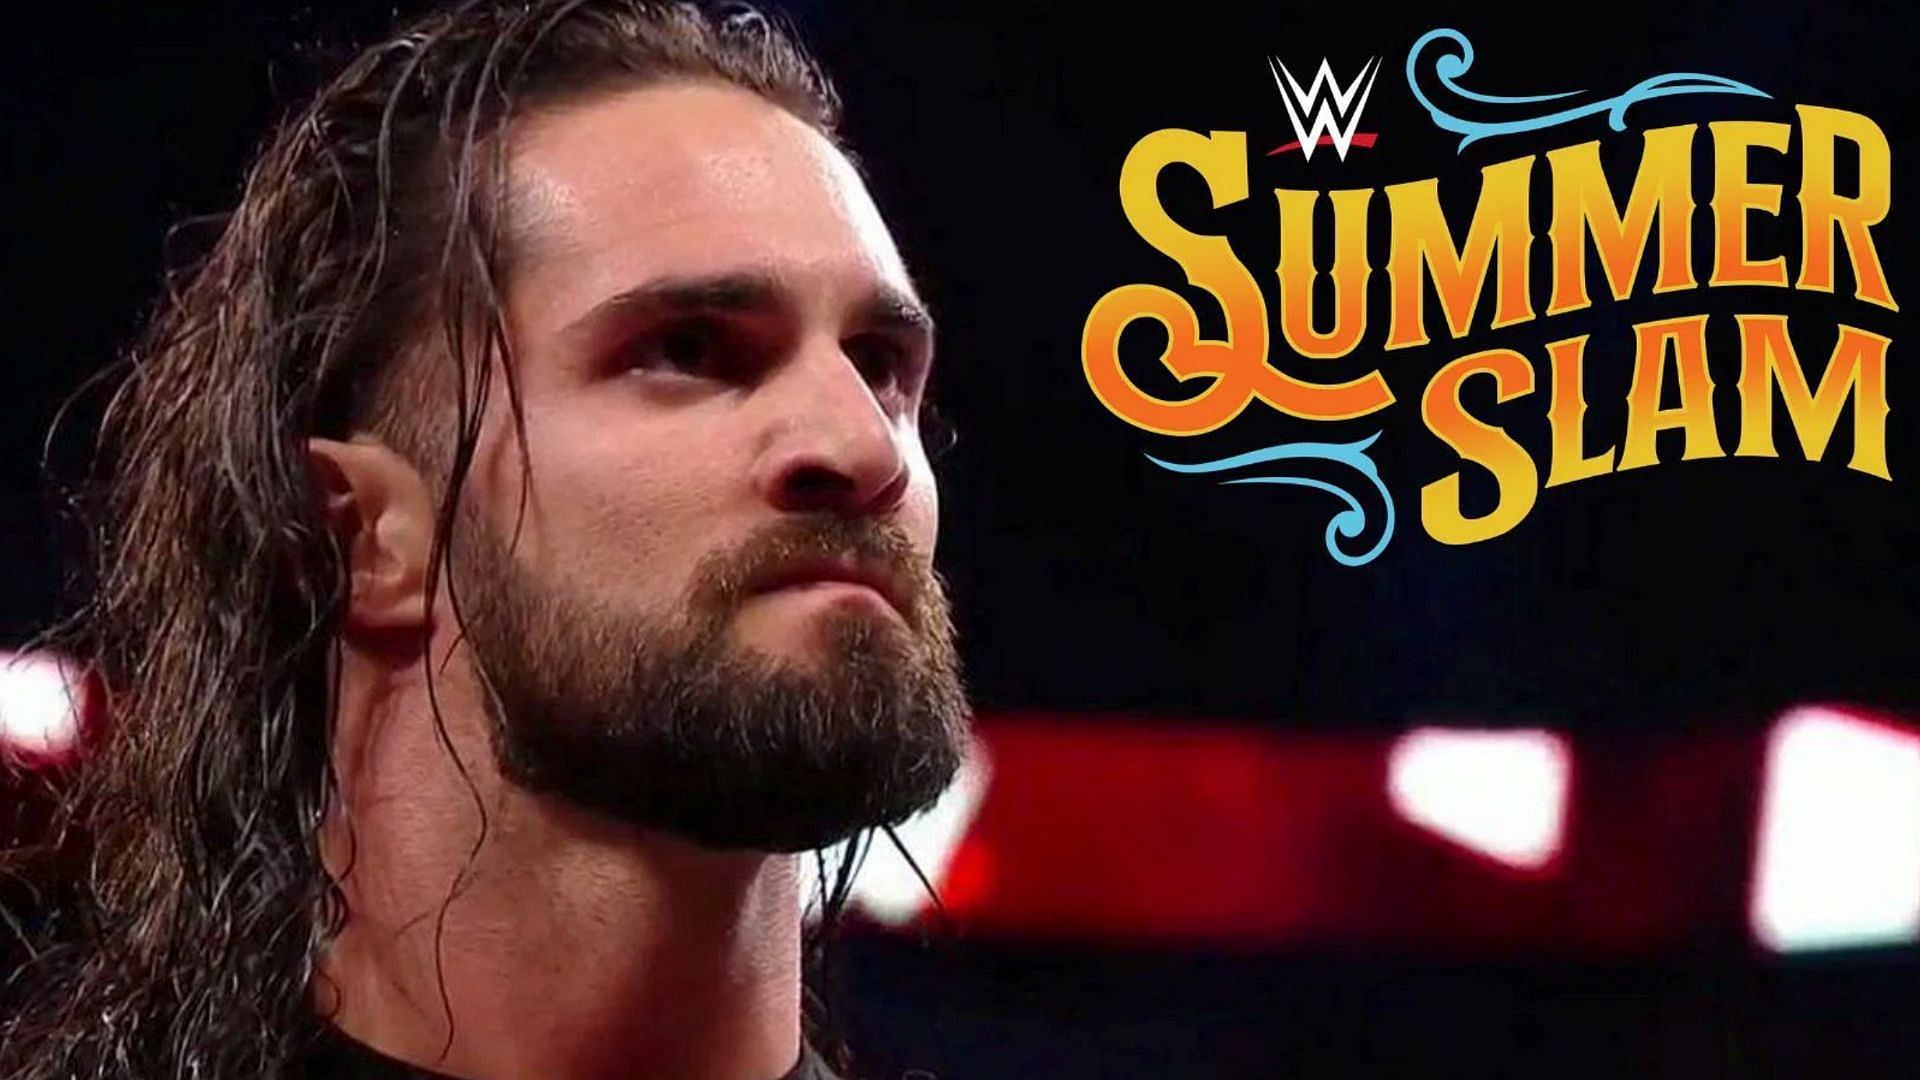 Will Seth Rollins find success at WWE SummerSlam?